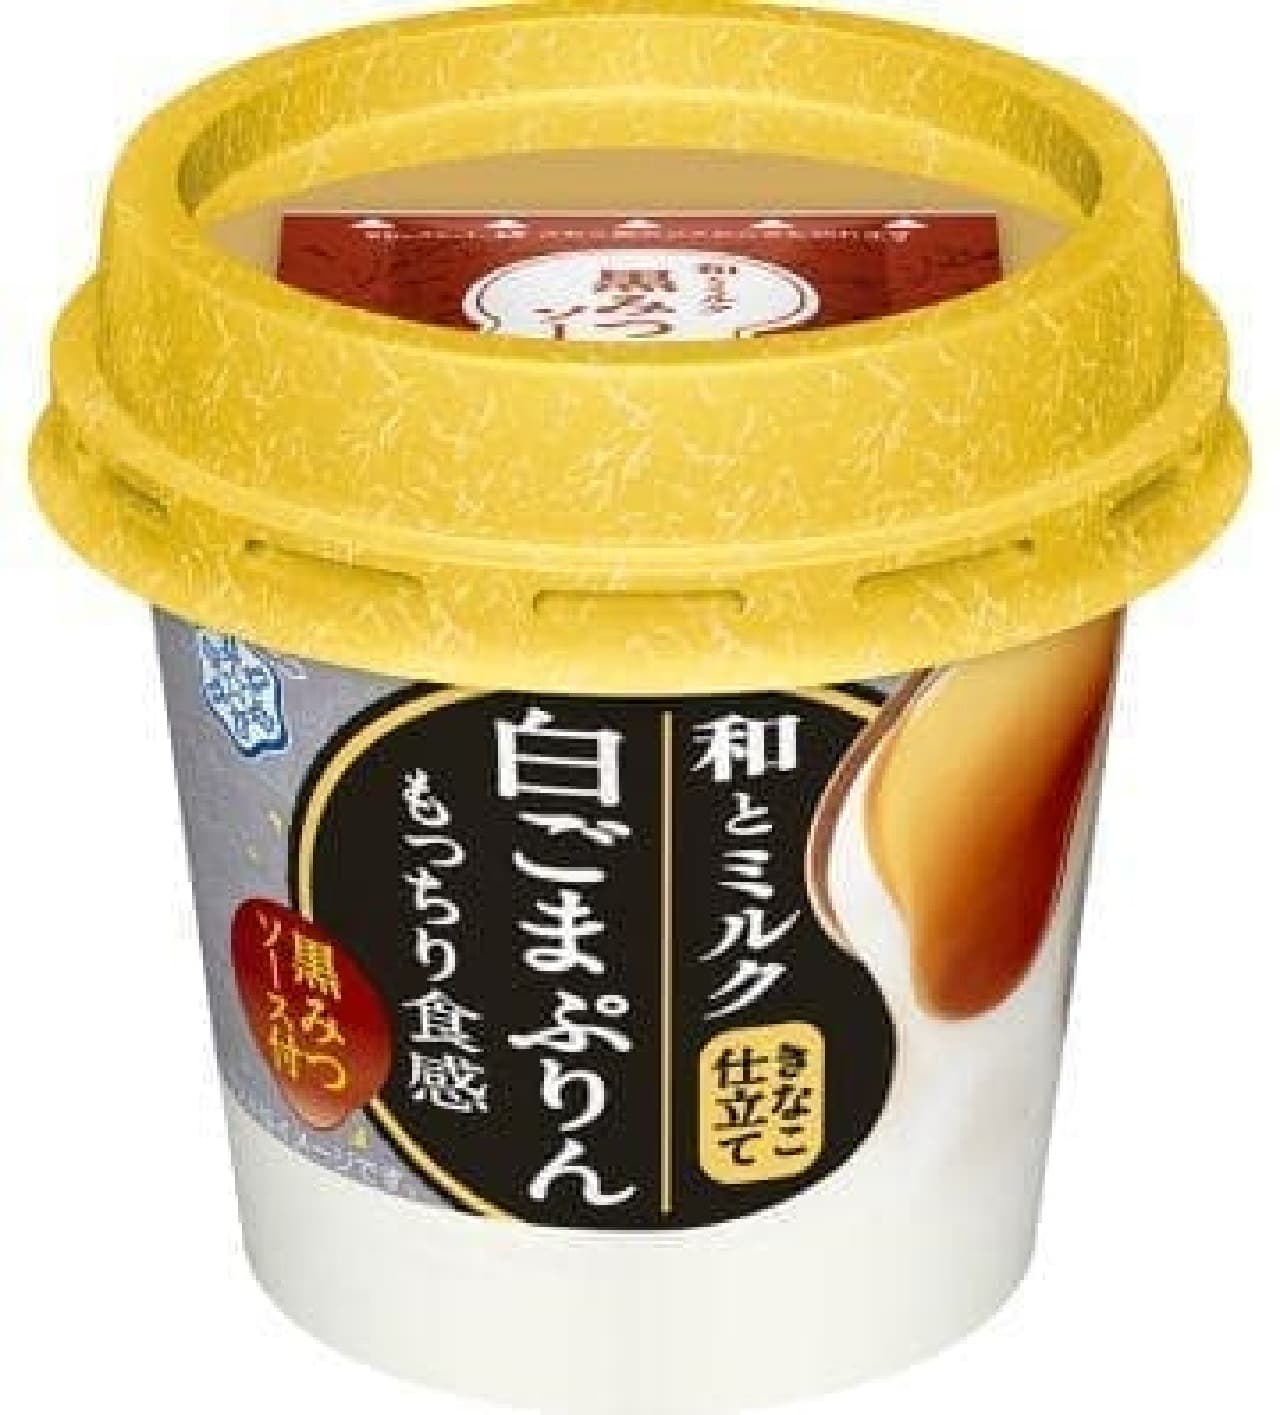 Snow Brand Megmilk "Japanese and Milk White Sesame Purin Kinako Tailoring"